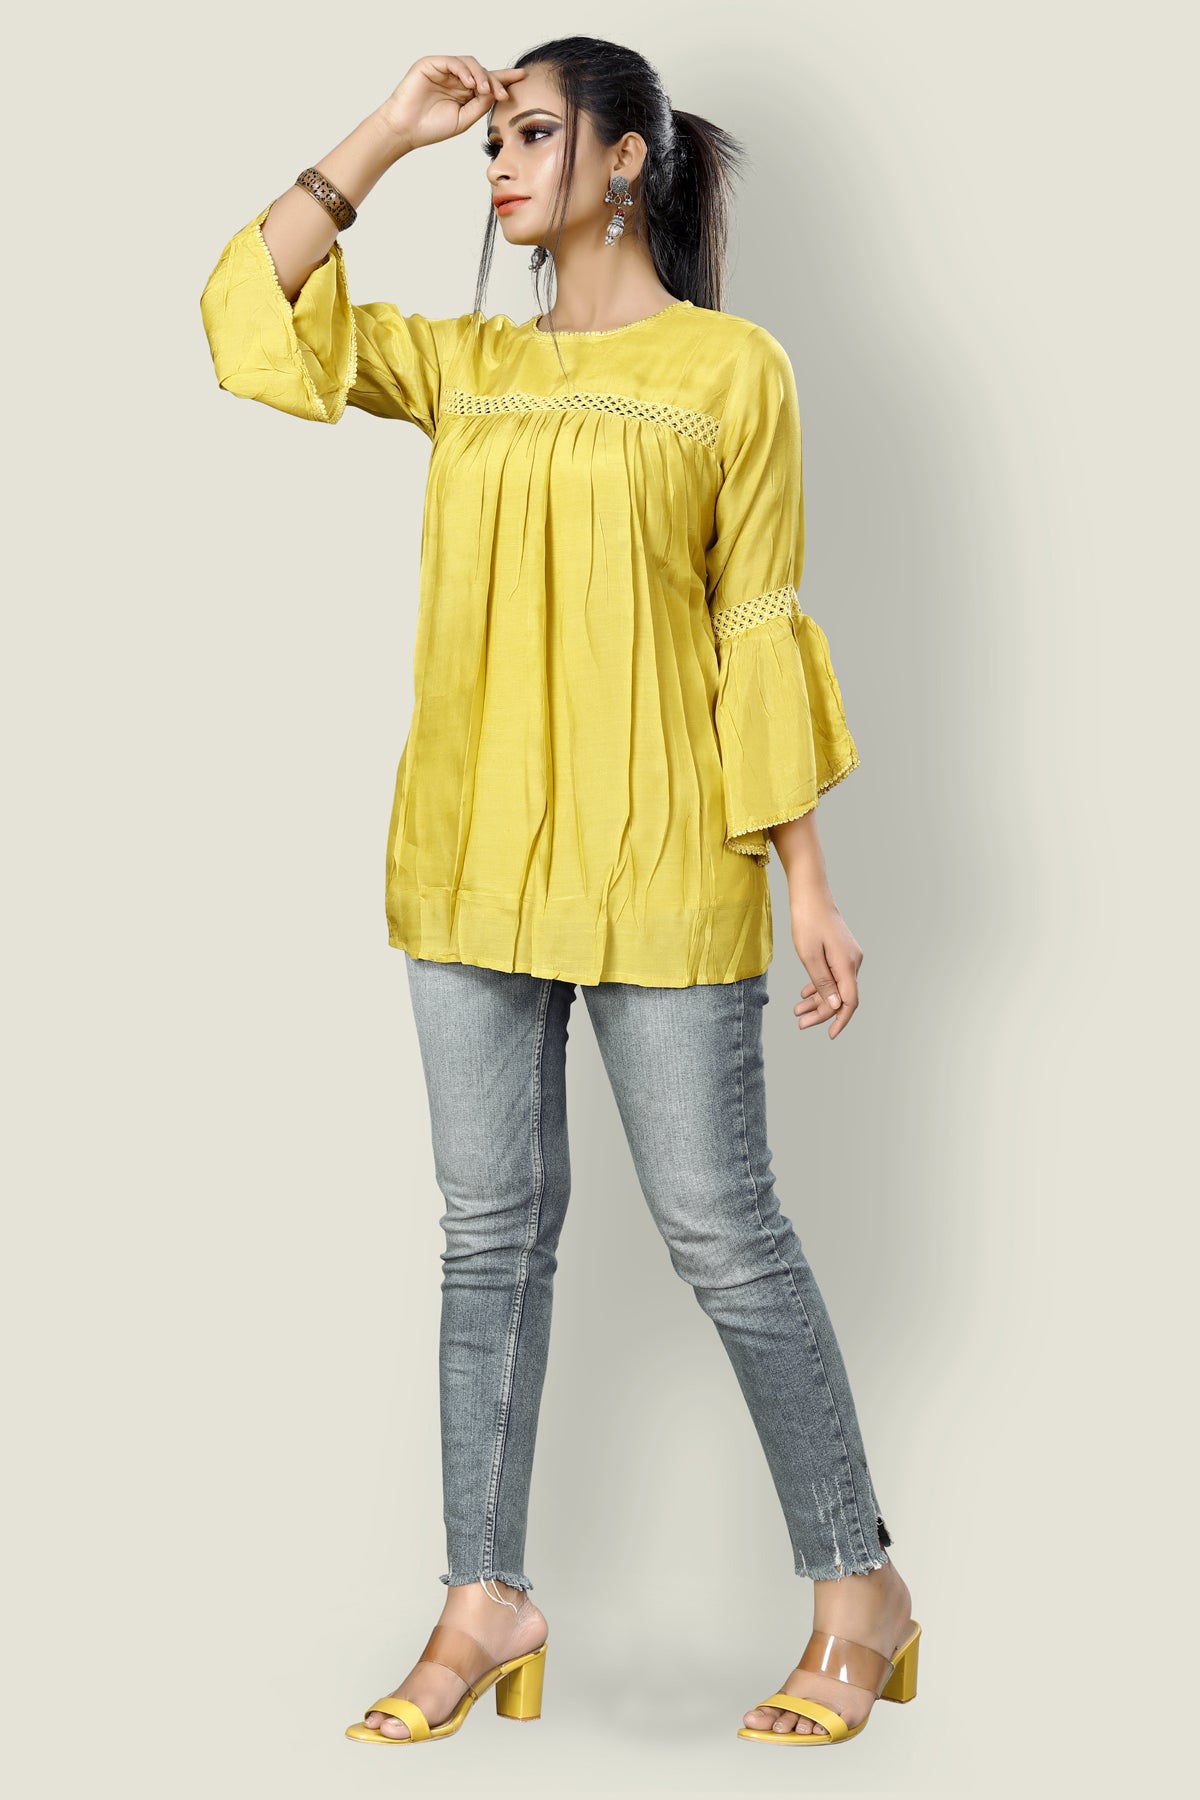 Buy Designer Lamen Yellow Top tunic